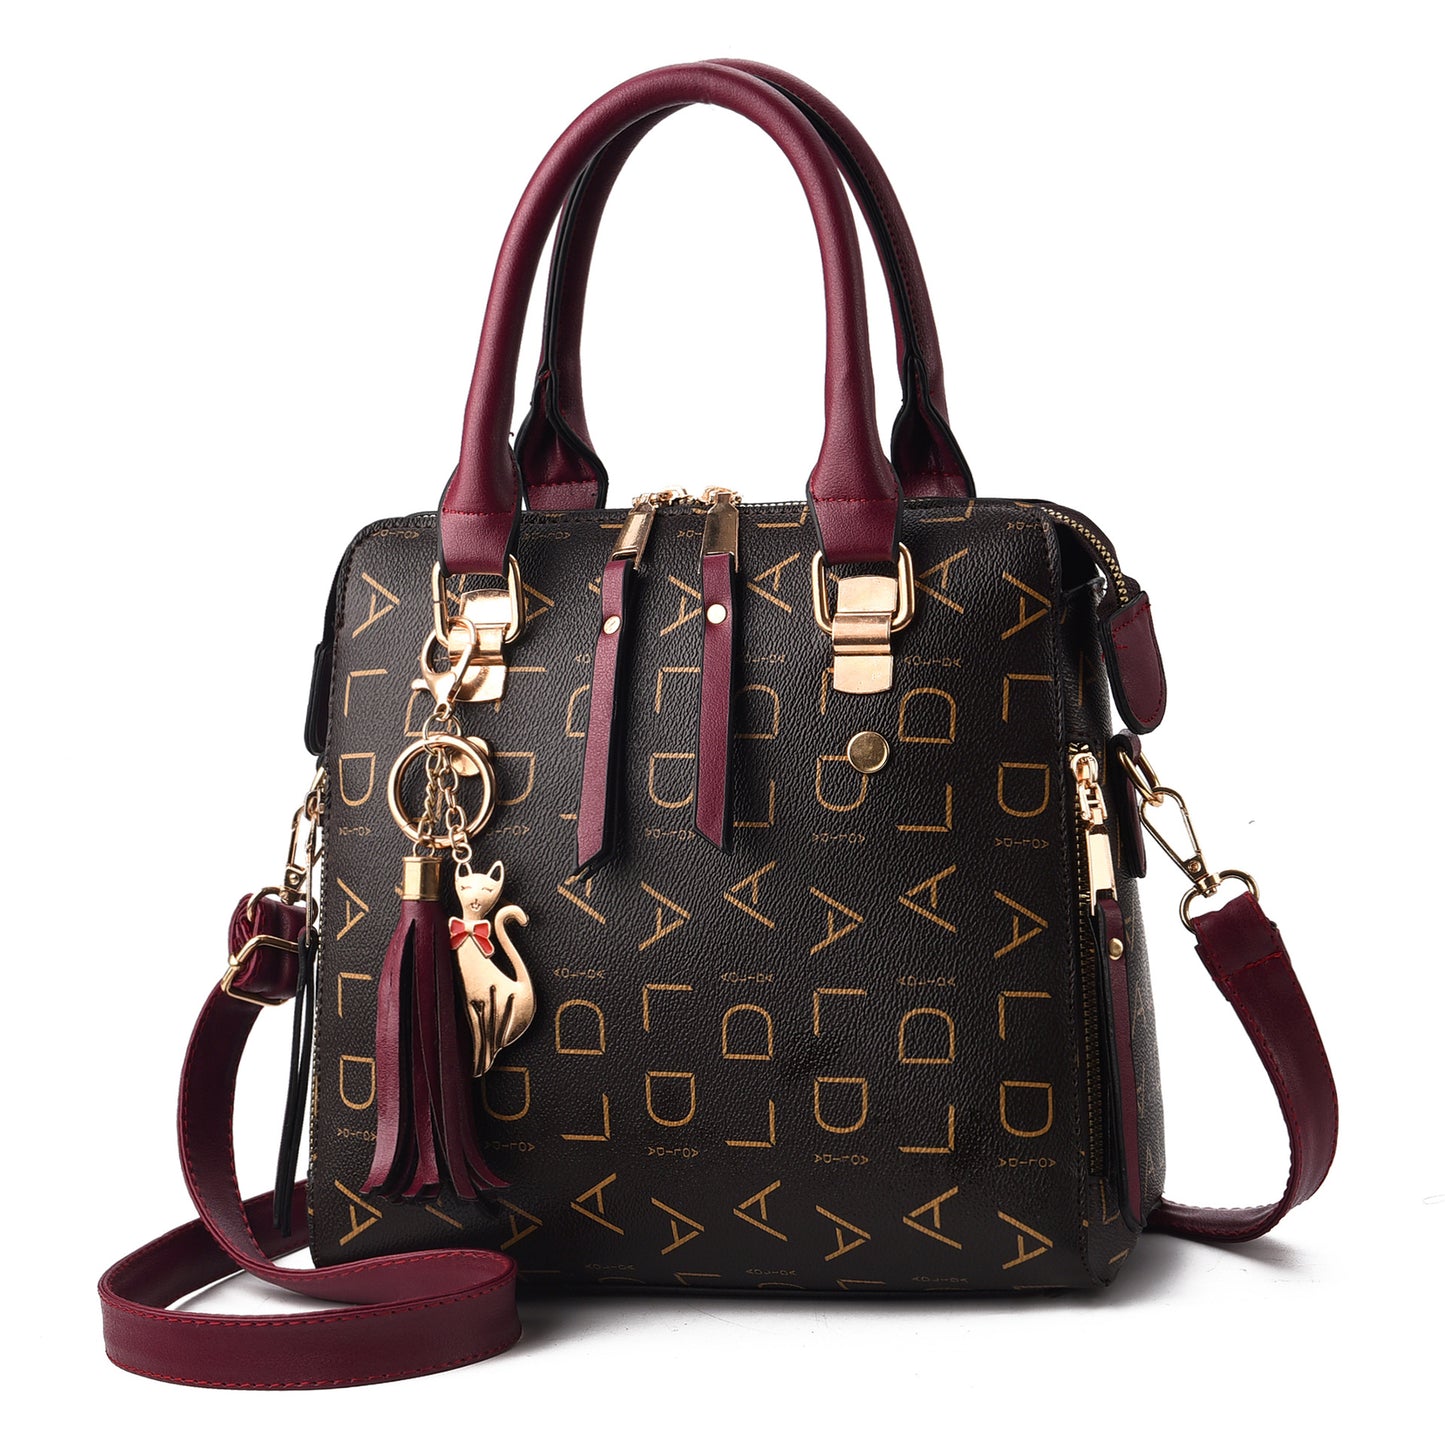 New Women's Bag Leisure Shoulder Bag Large Capacity PU Leather Handbag Cross Bag